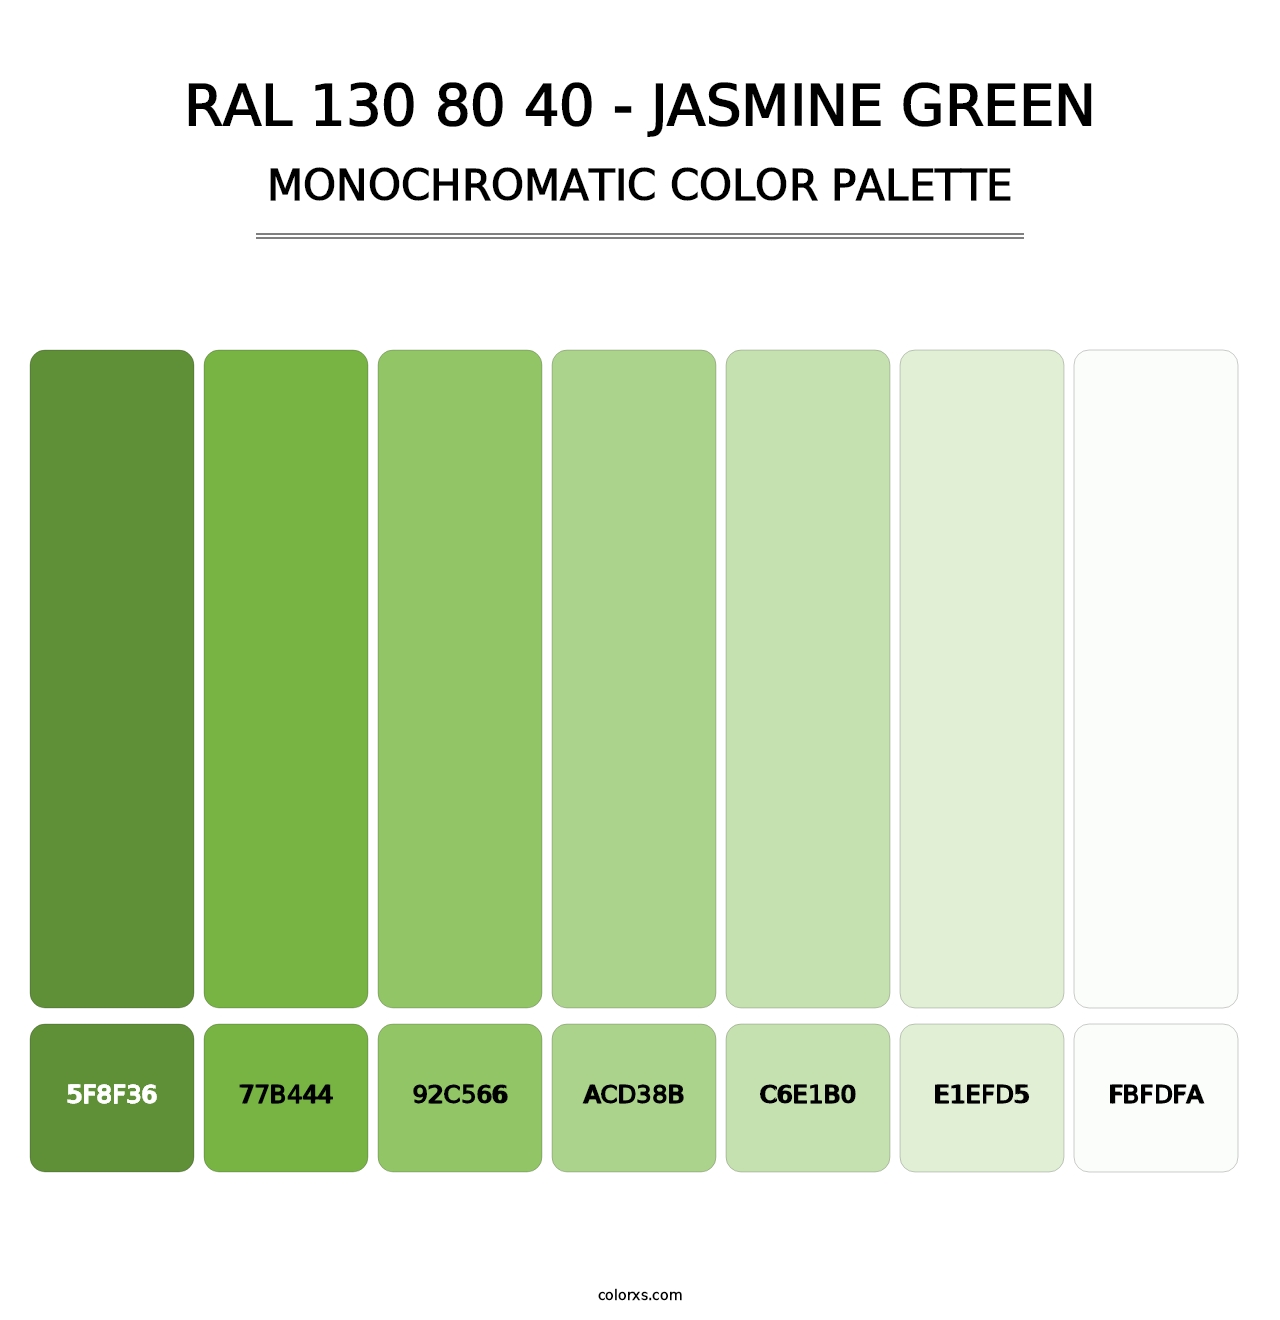 RAL 130 80 40 - Jasmine Green - Monochromatic Color Palette